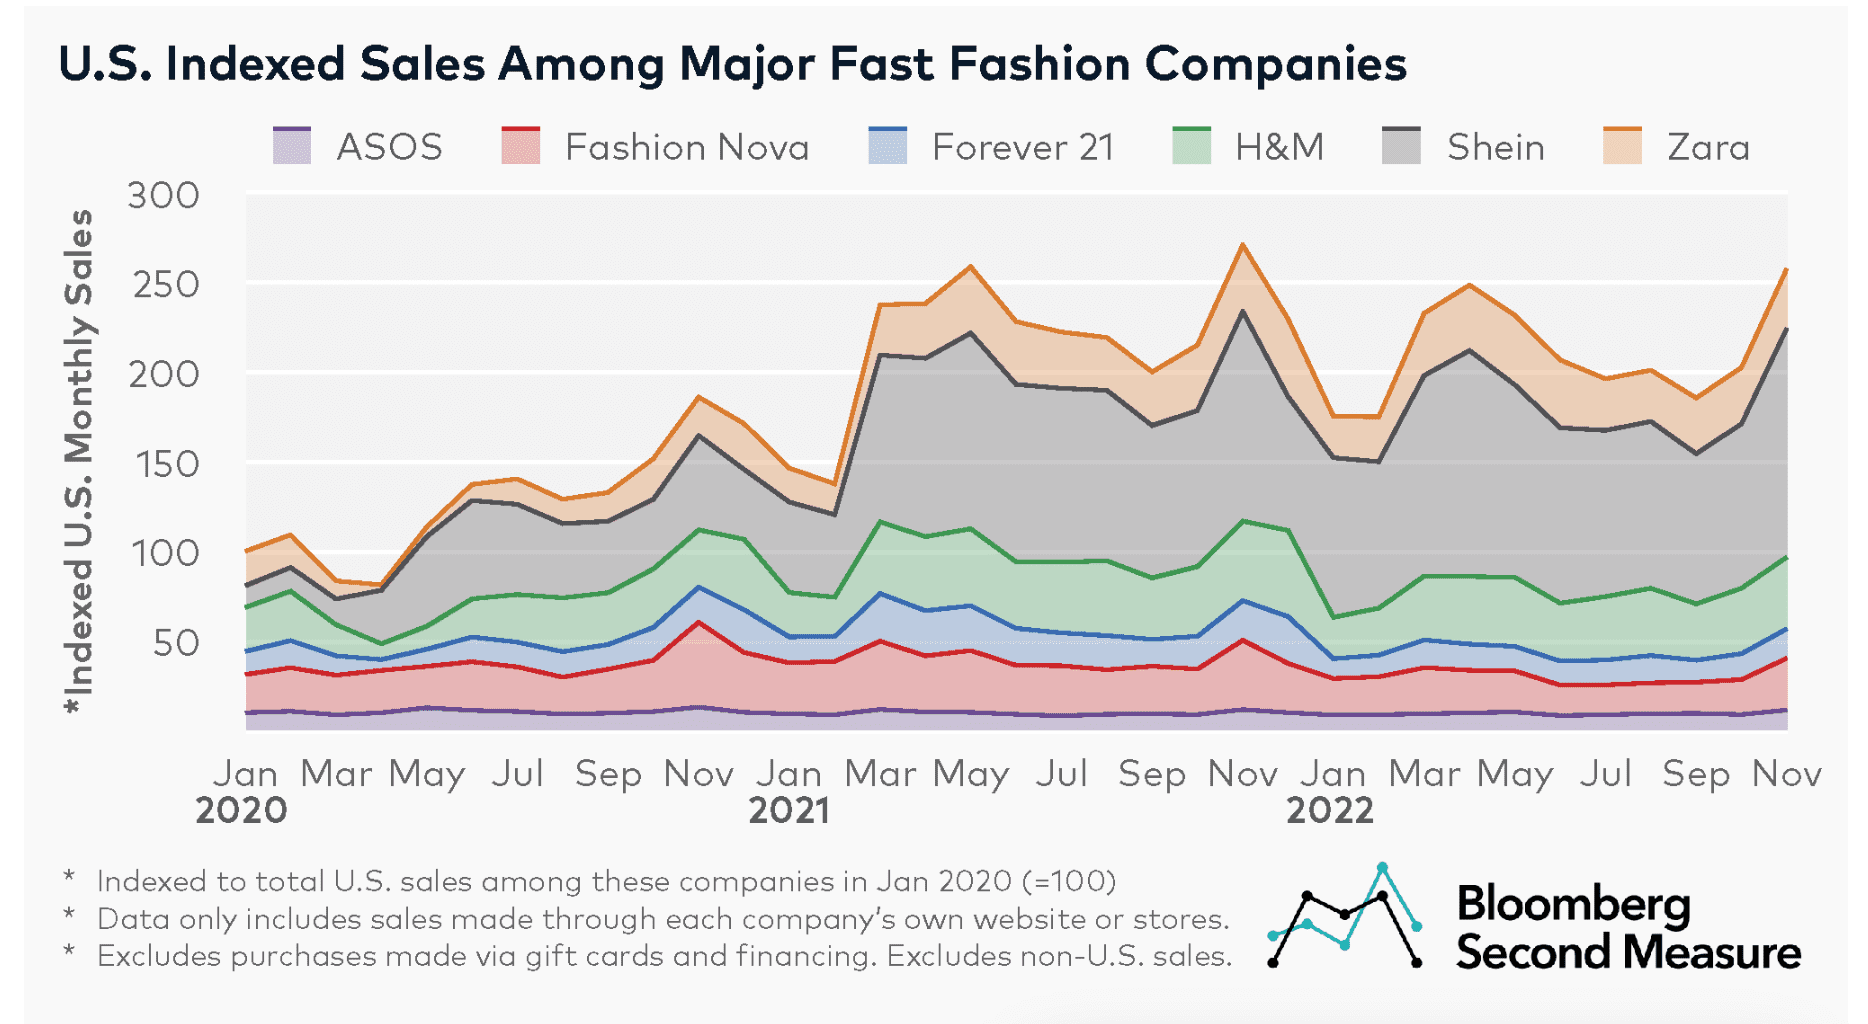 Fast fashion market share 2020 - 2022